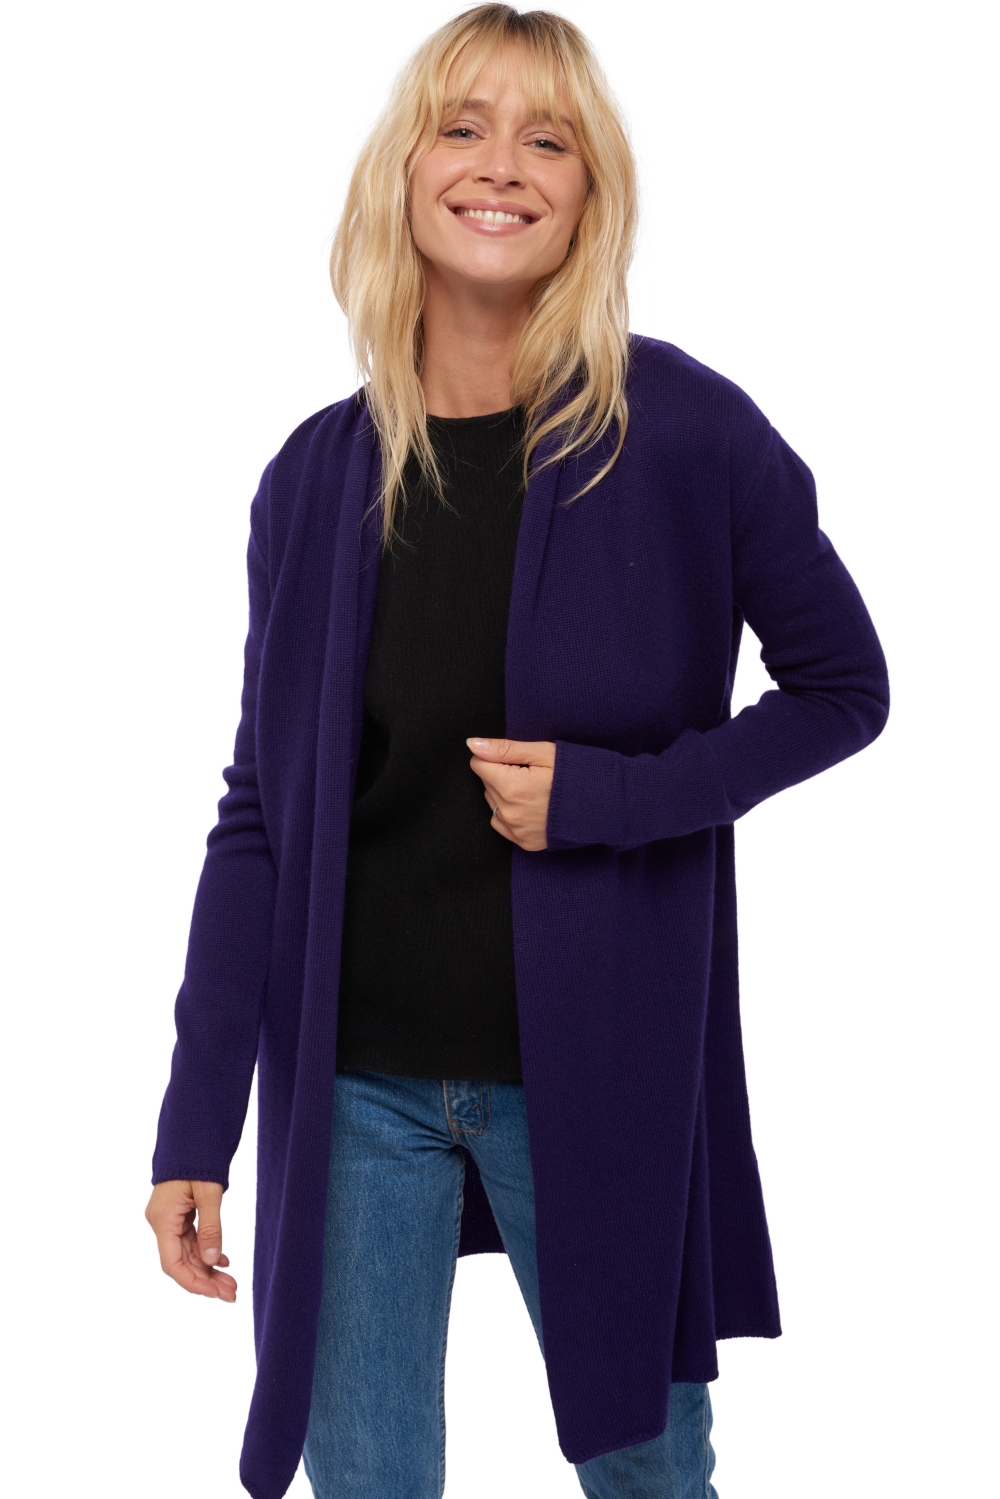 Cachemire robe manteau femme perla deep purple 4xl